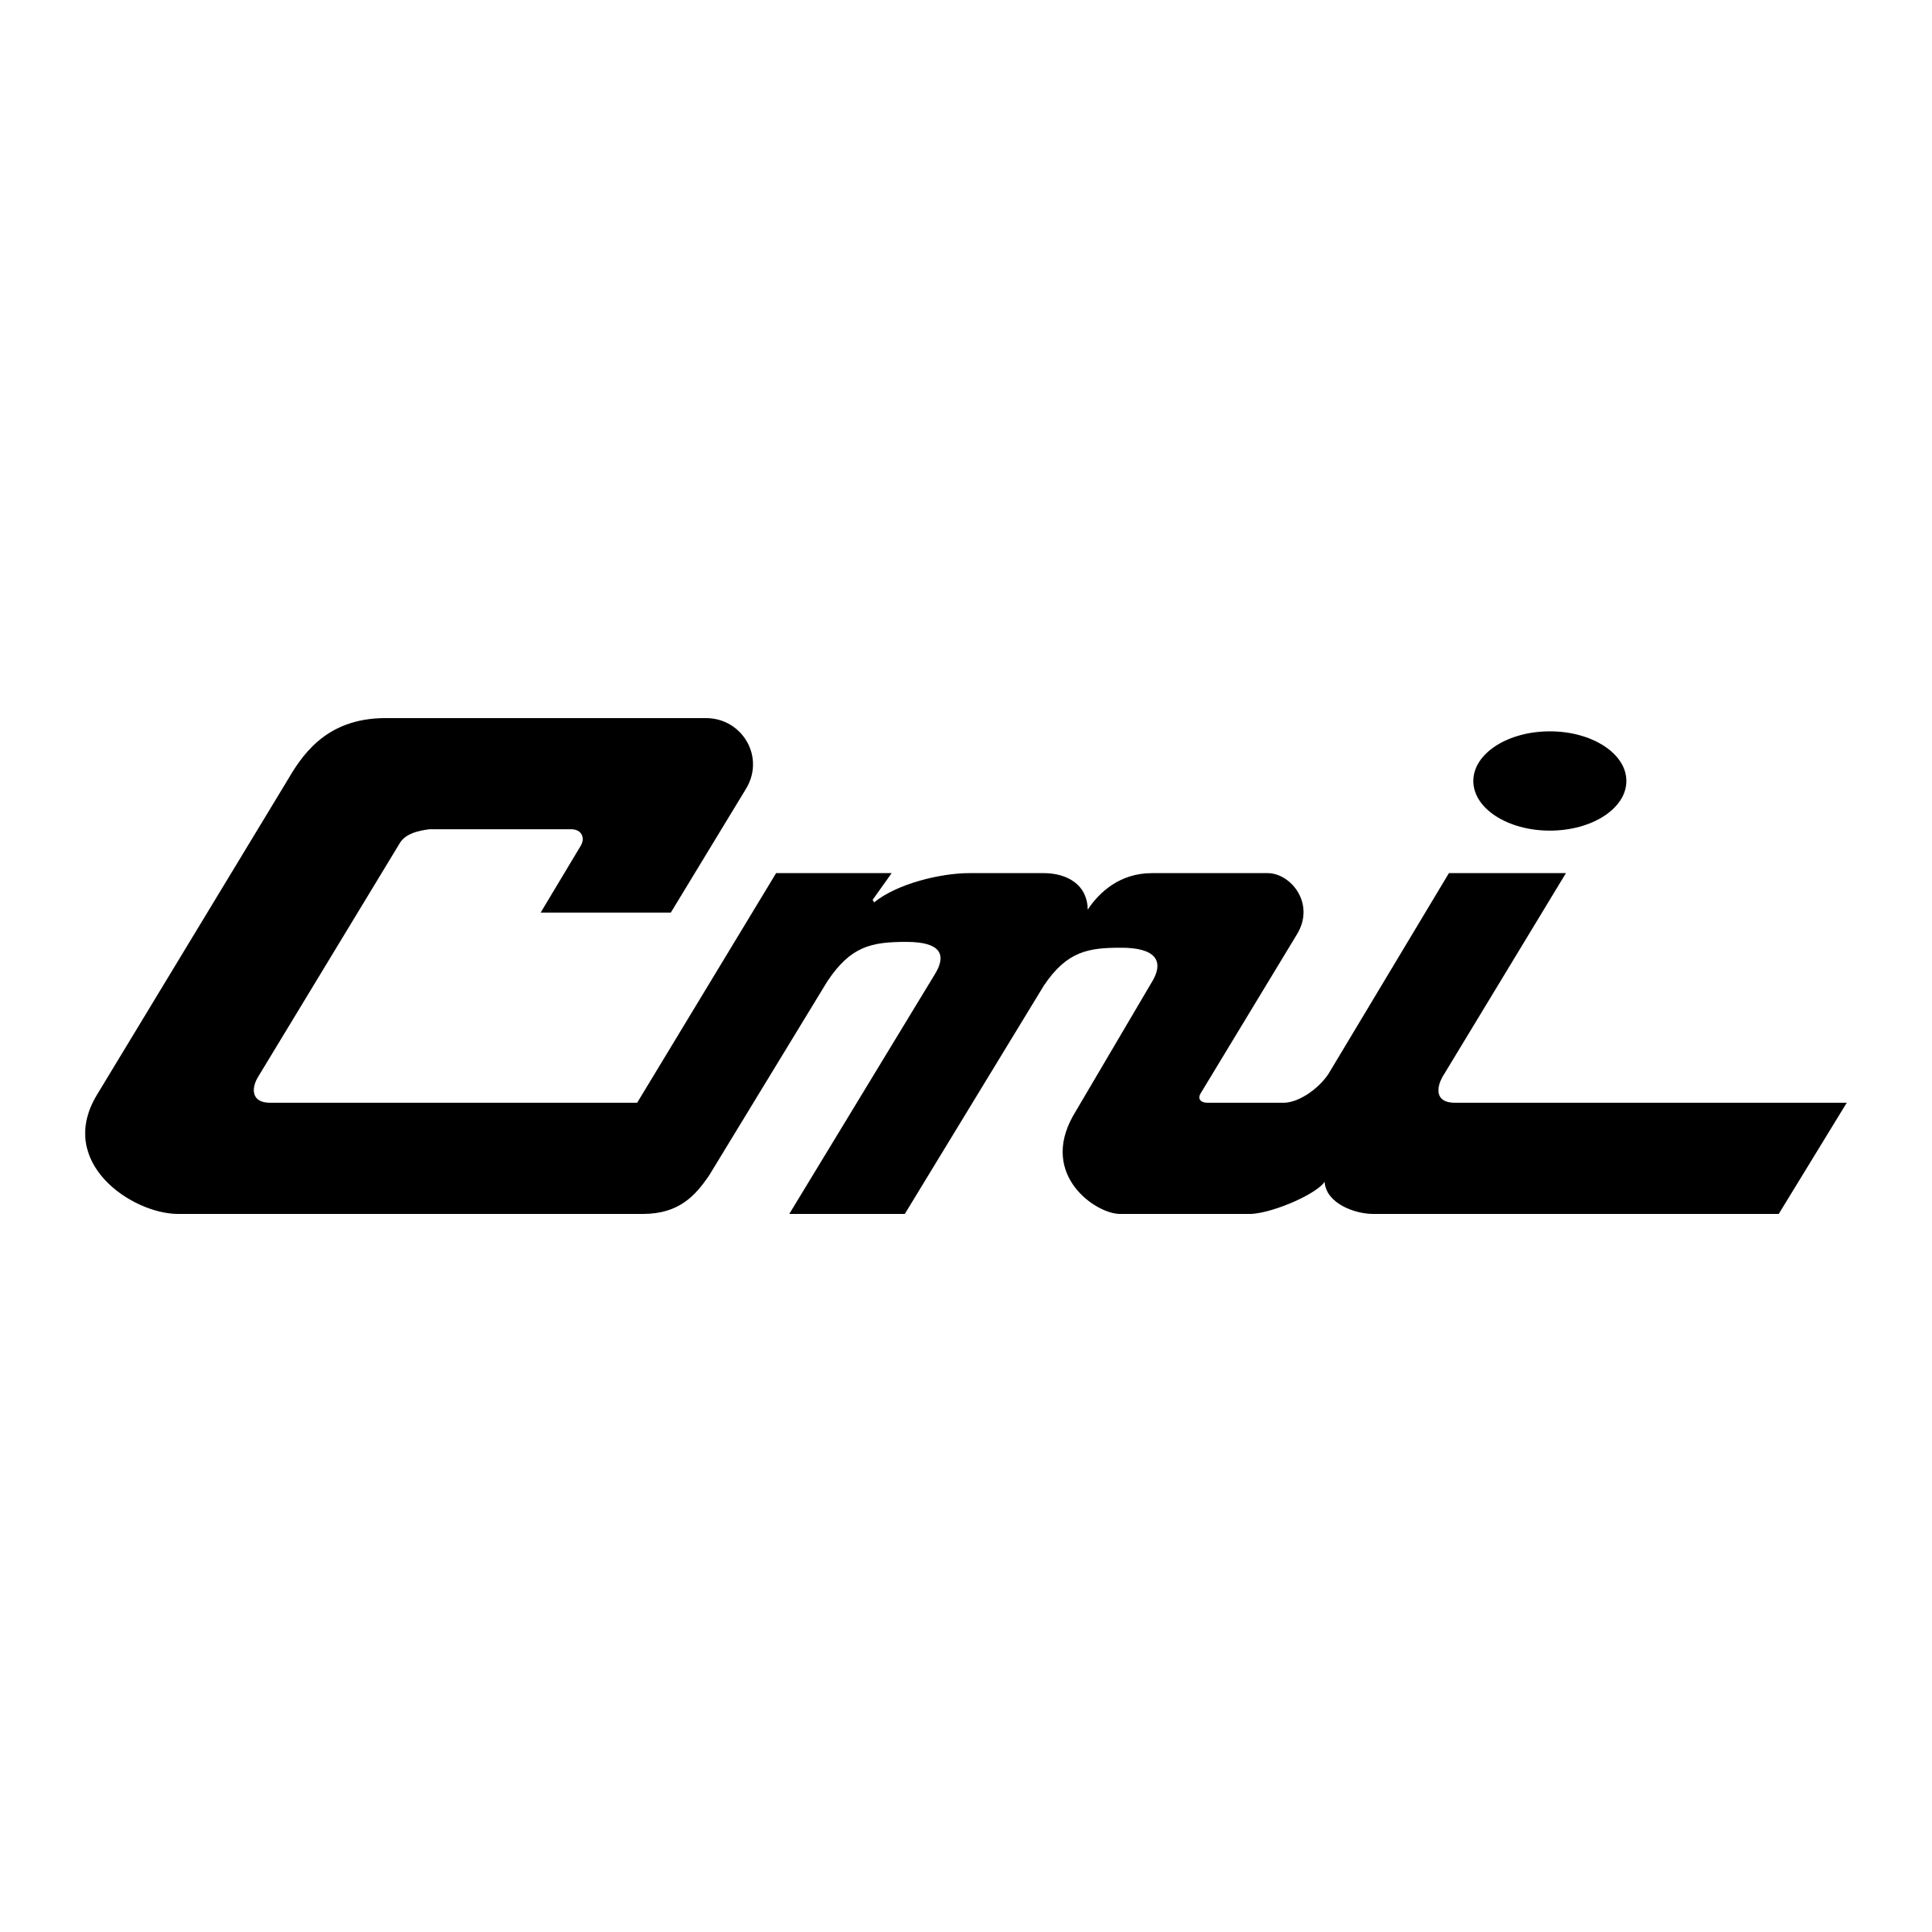 CMI Logo - Cmi Logo PNG Transparent & SVG Vector - Freebie Supply